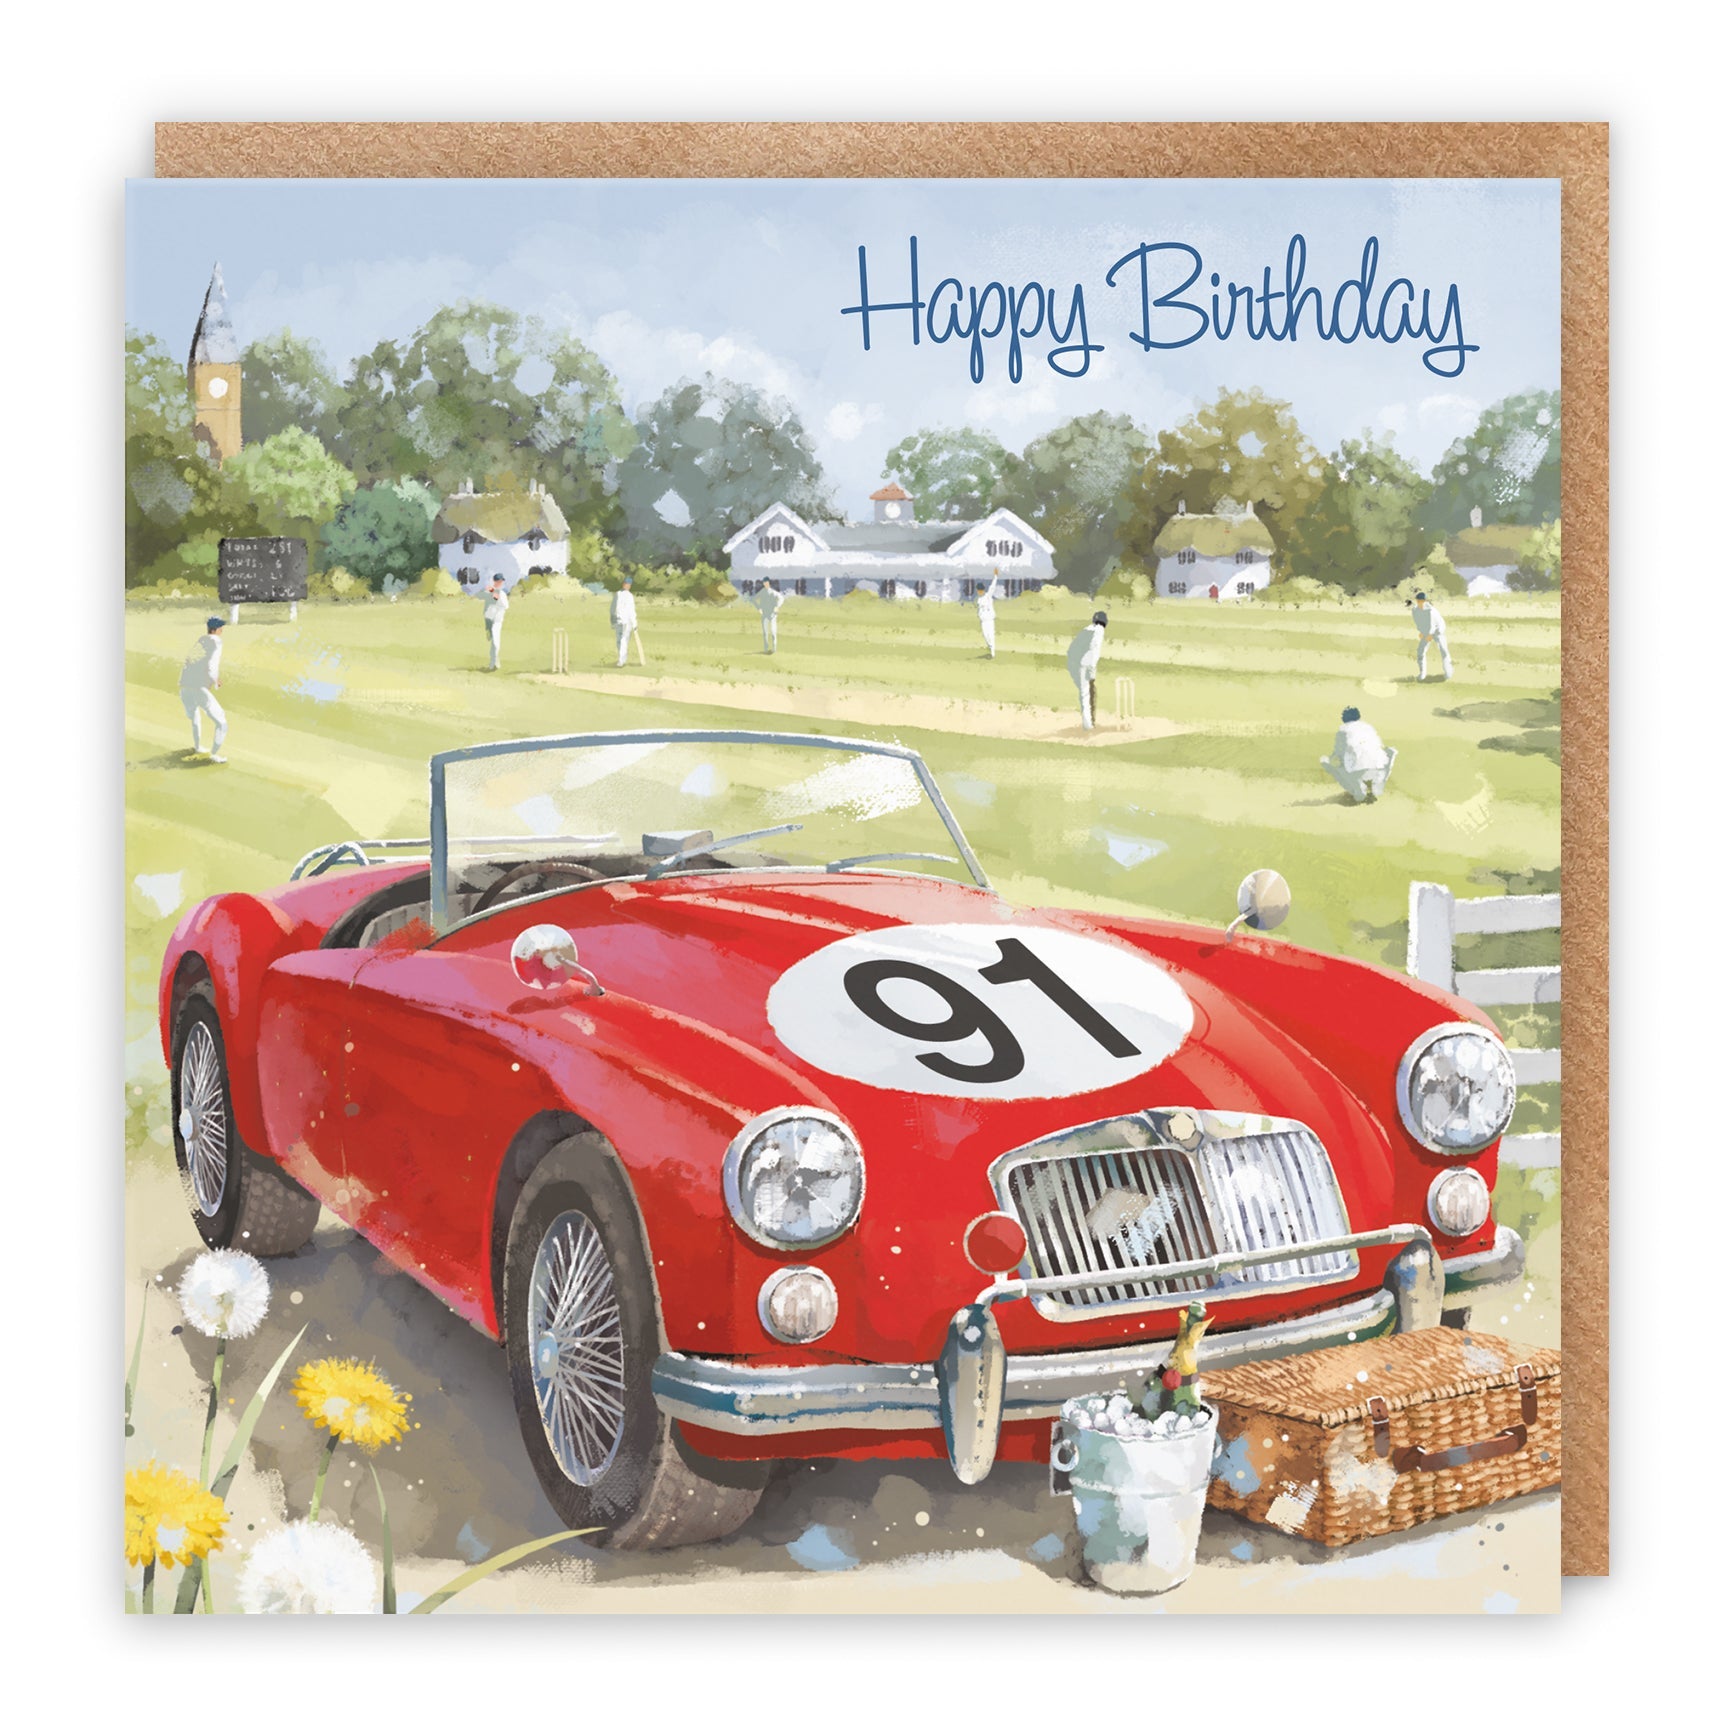 91st Birthday Card - Age 91